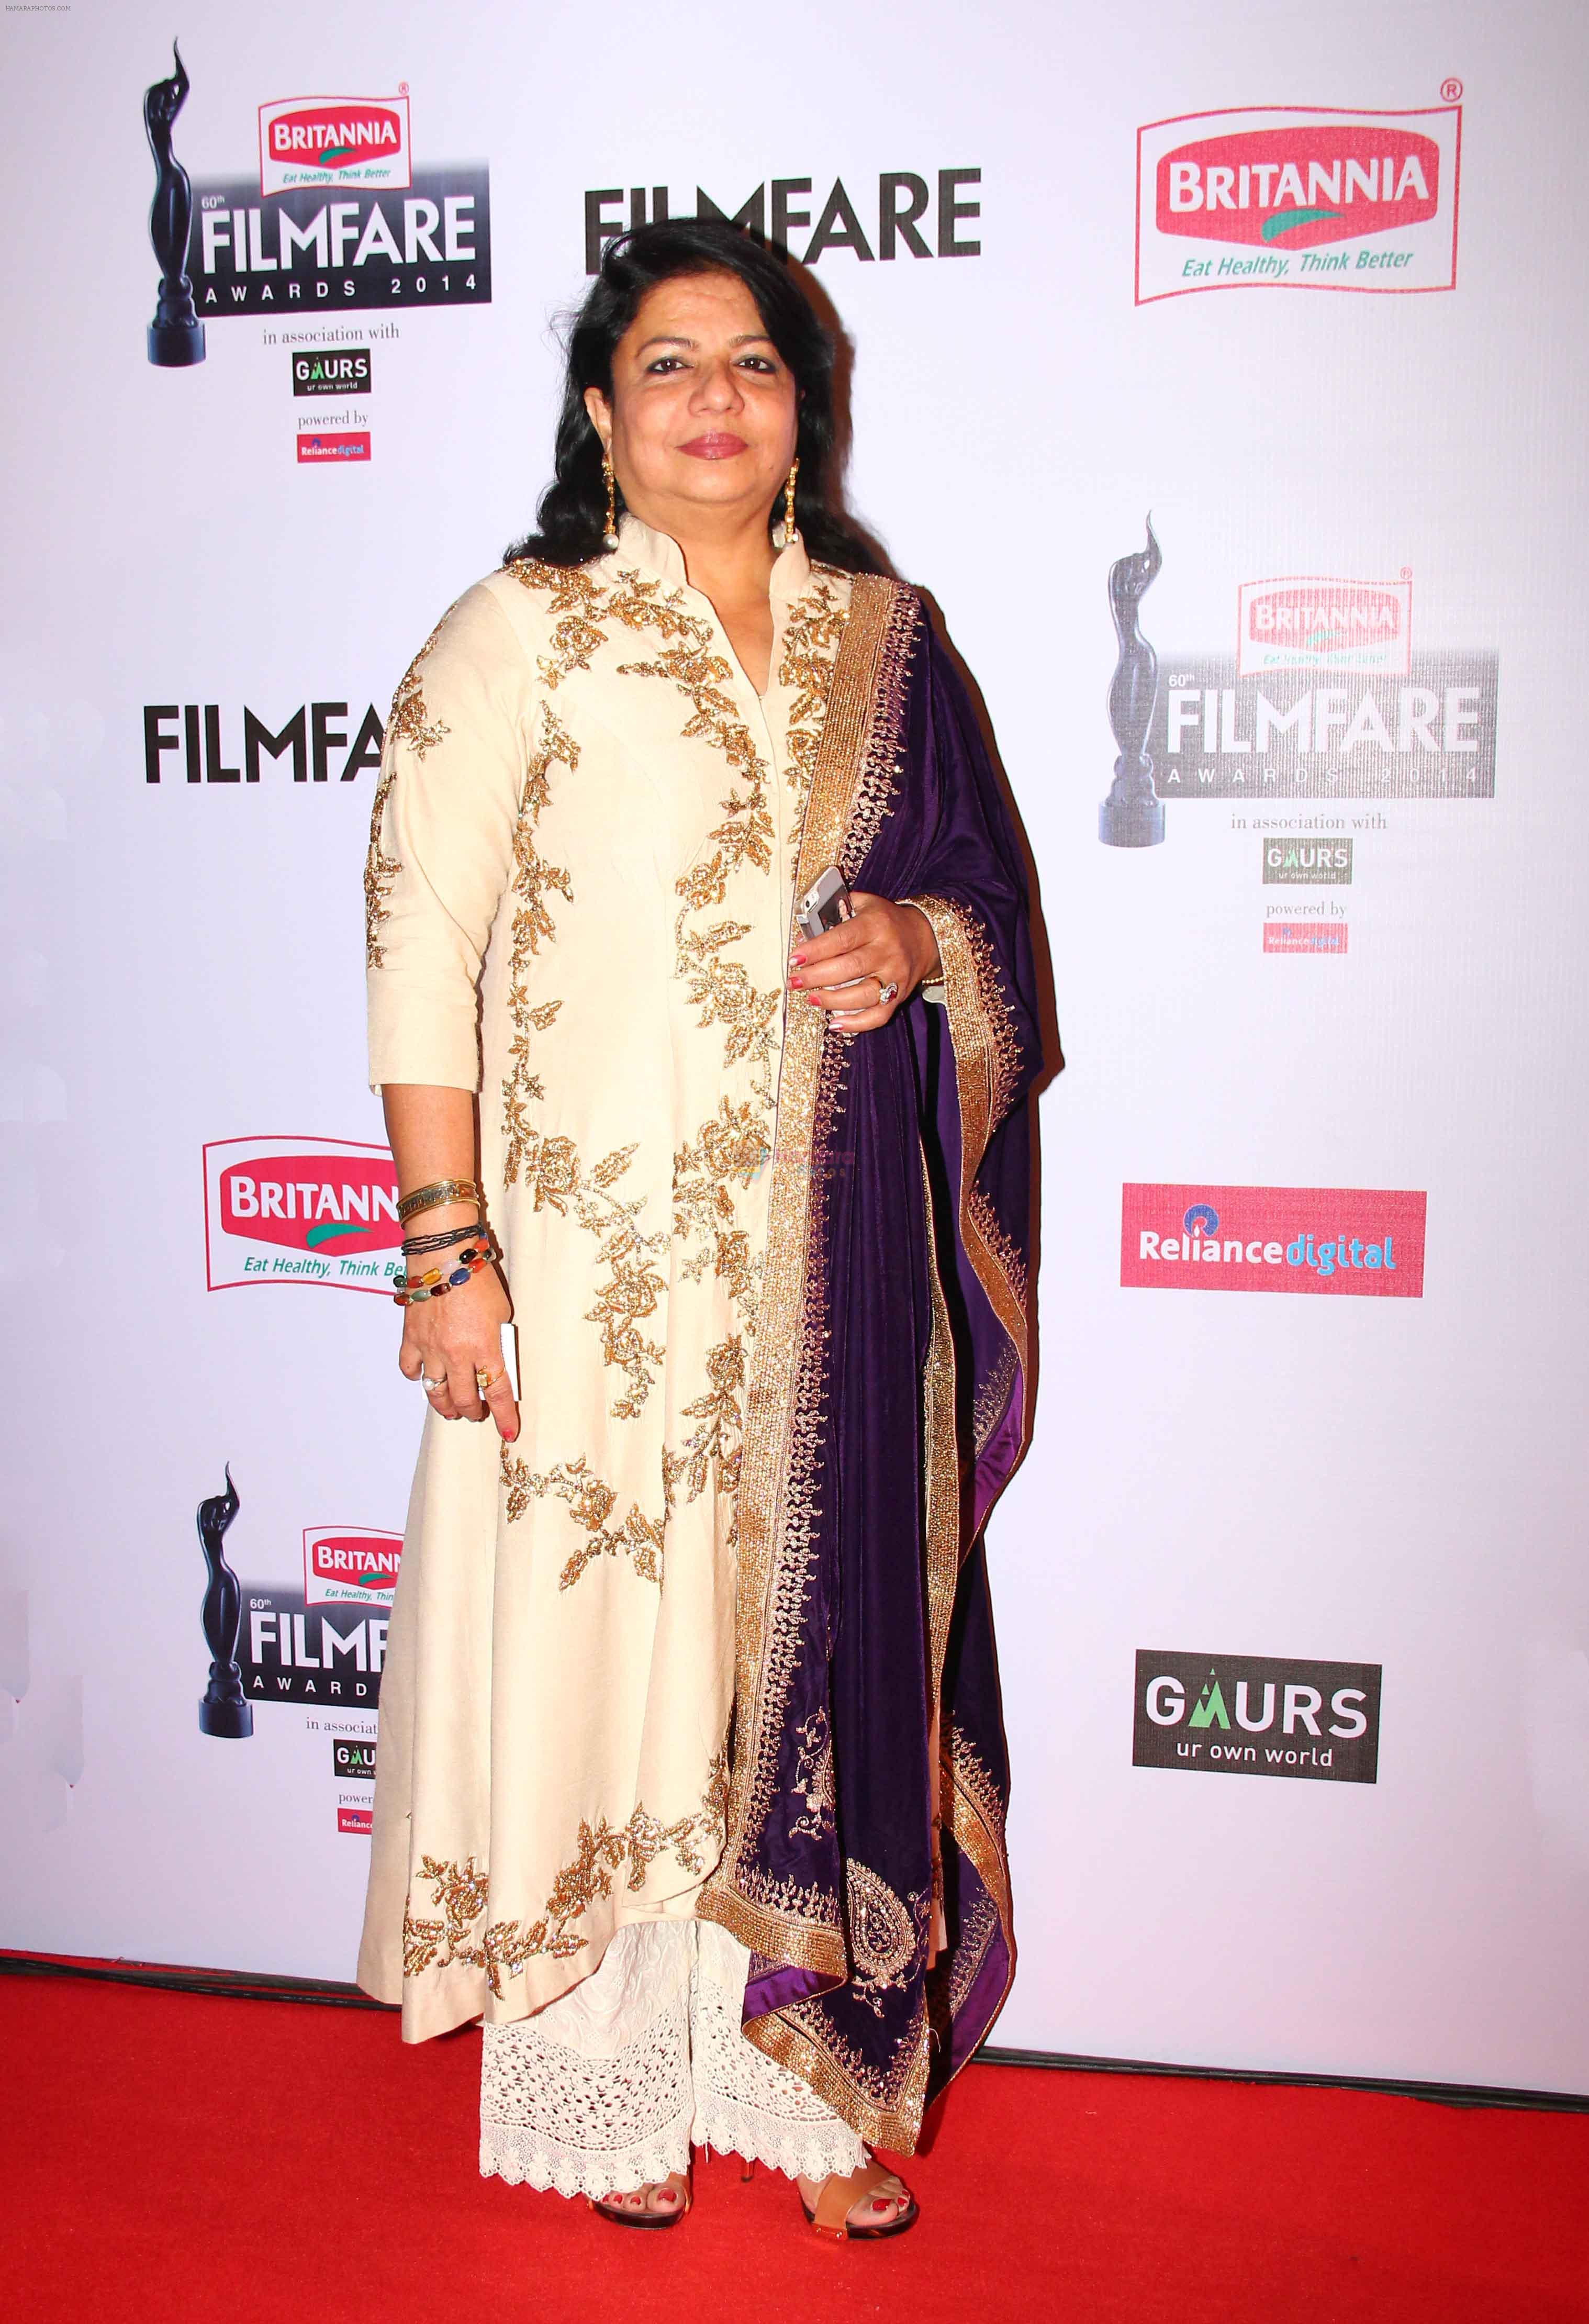 Madhu Chopra graces the red carpet at the 60th Britannia Filmfare Awards